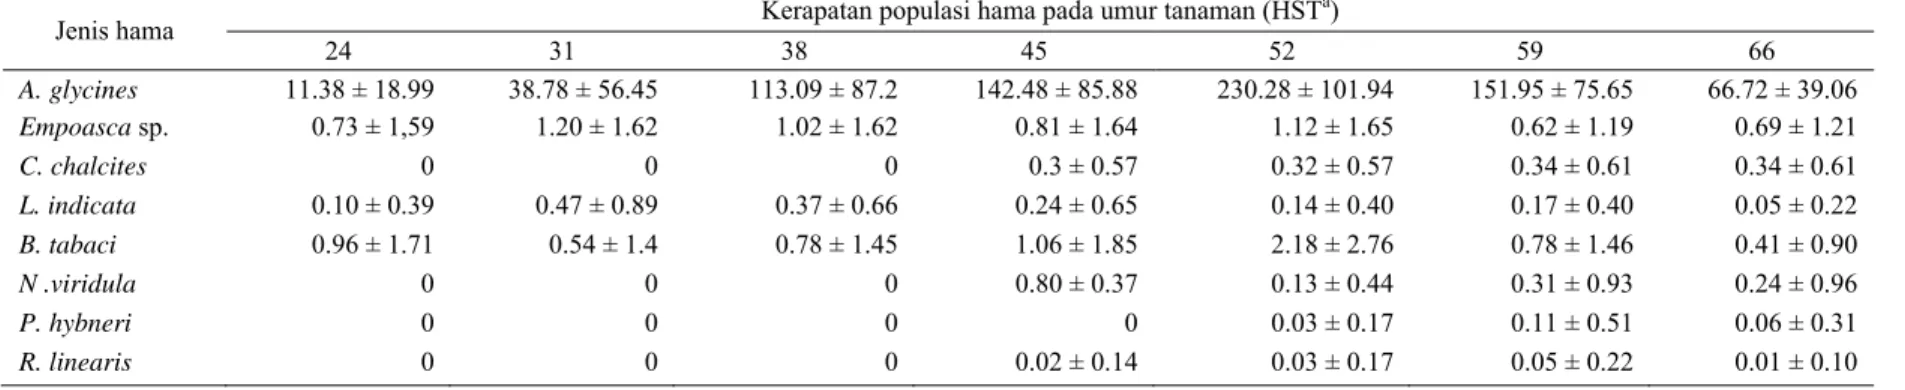 Tabel 1 Keragaman jenis hama dan kerapatan populasinya pada pertanaman edamame  